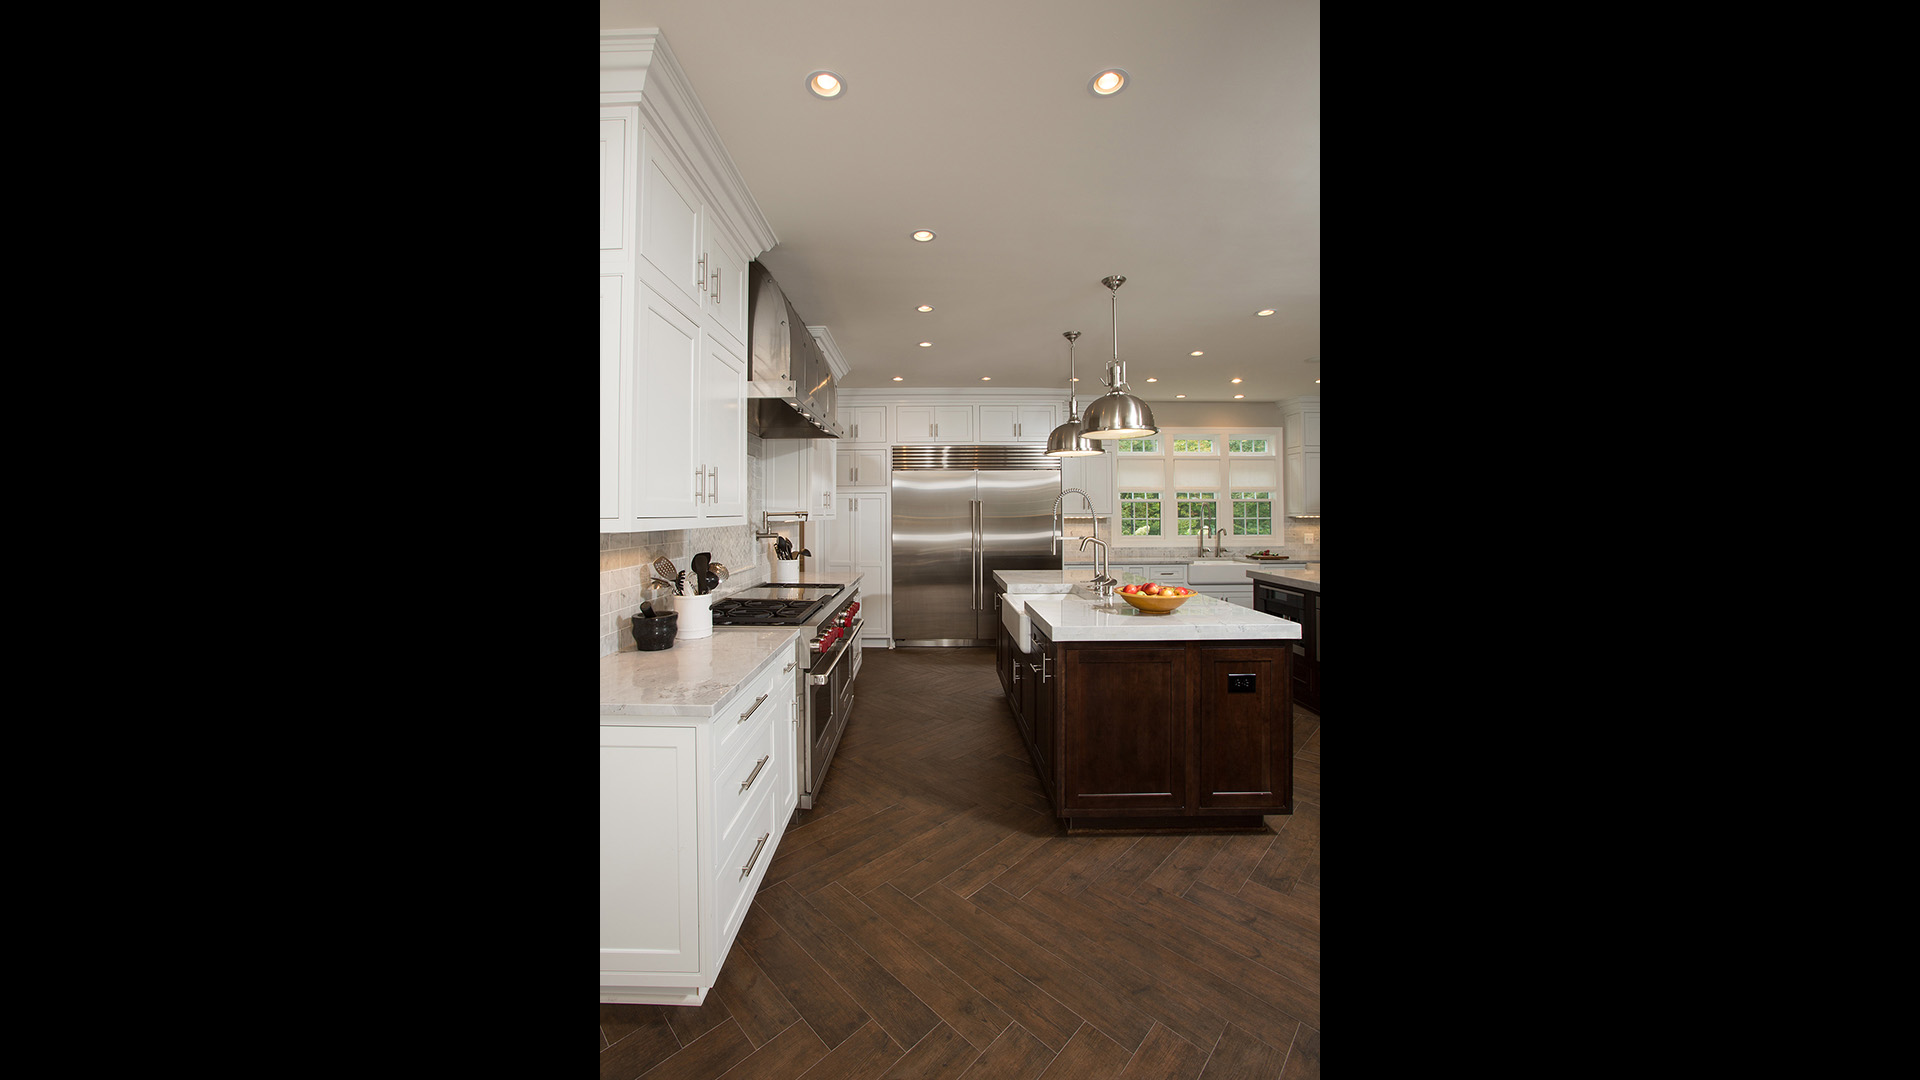 2015 NARI Capital CotY Finalist Award Winner, Residential Kitchen Over $150,000